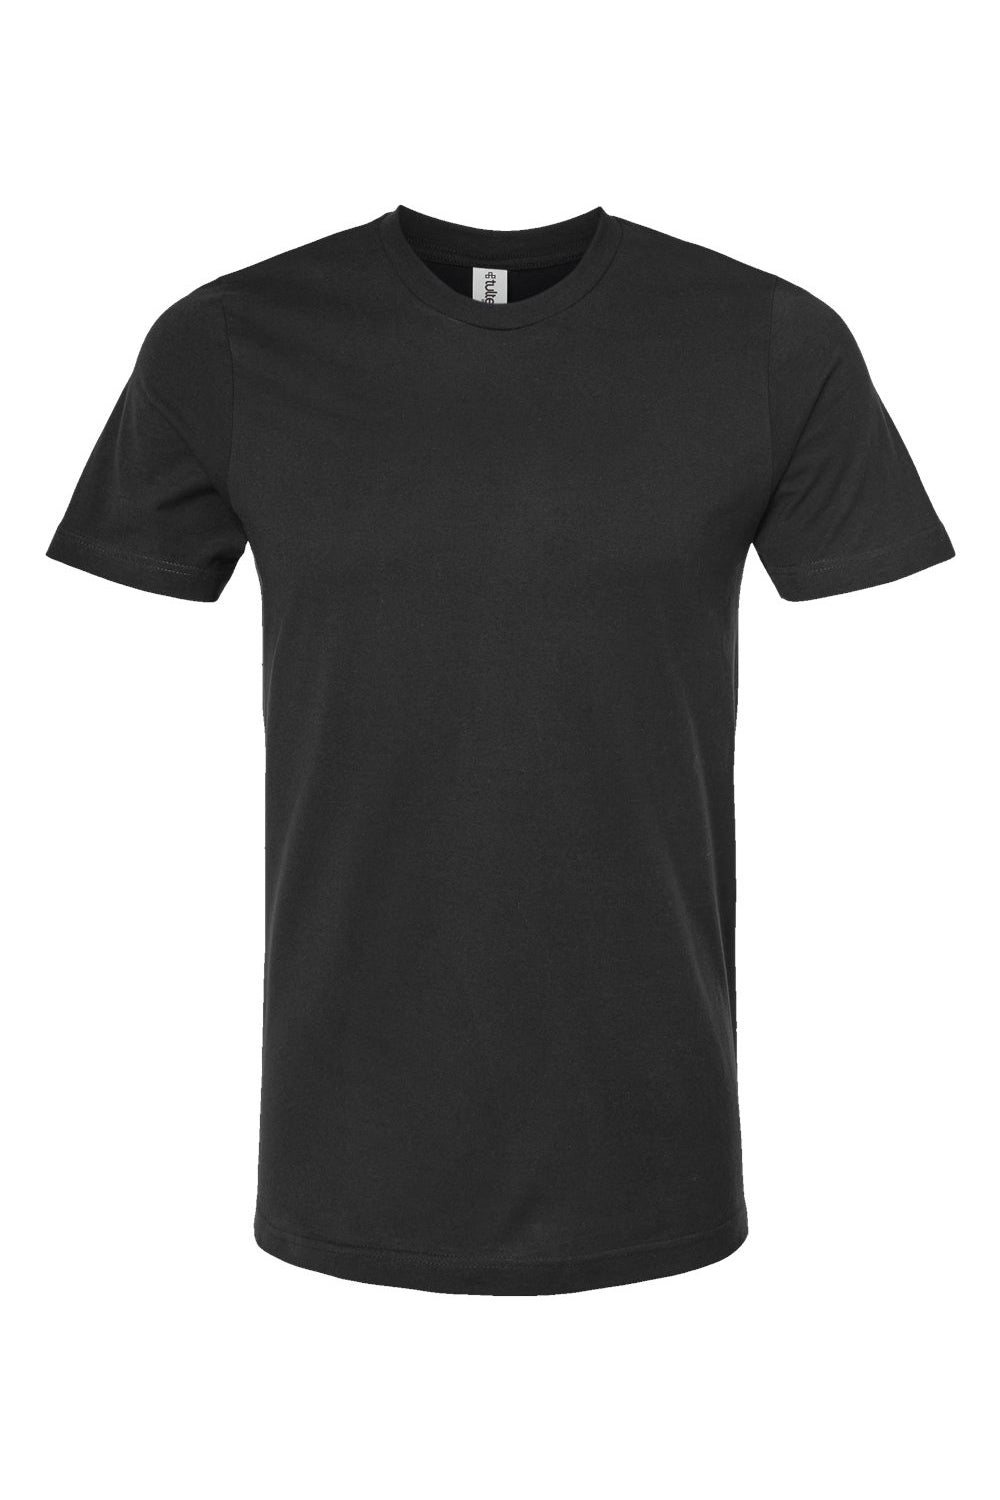 Tultex 502 Mens Premium Short Sleeve Crewneck T-Shirt Black Flat Front